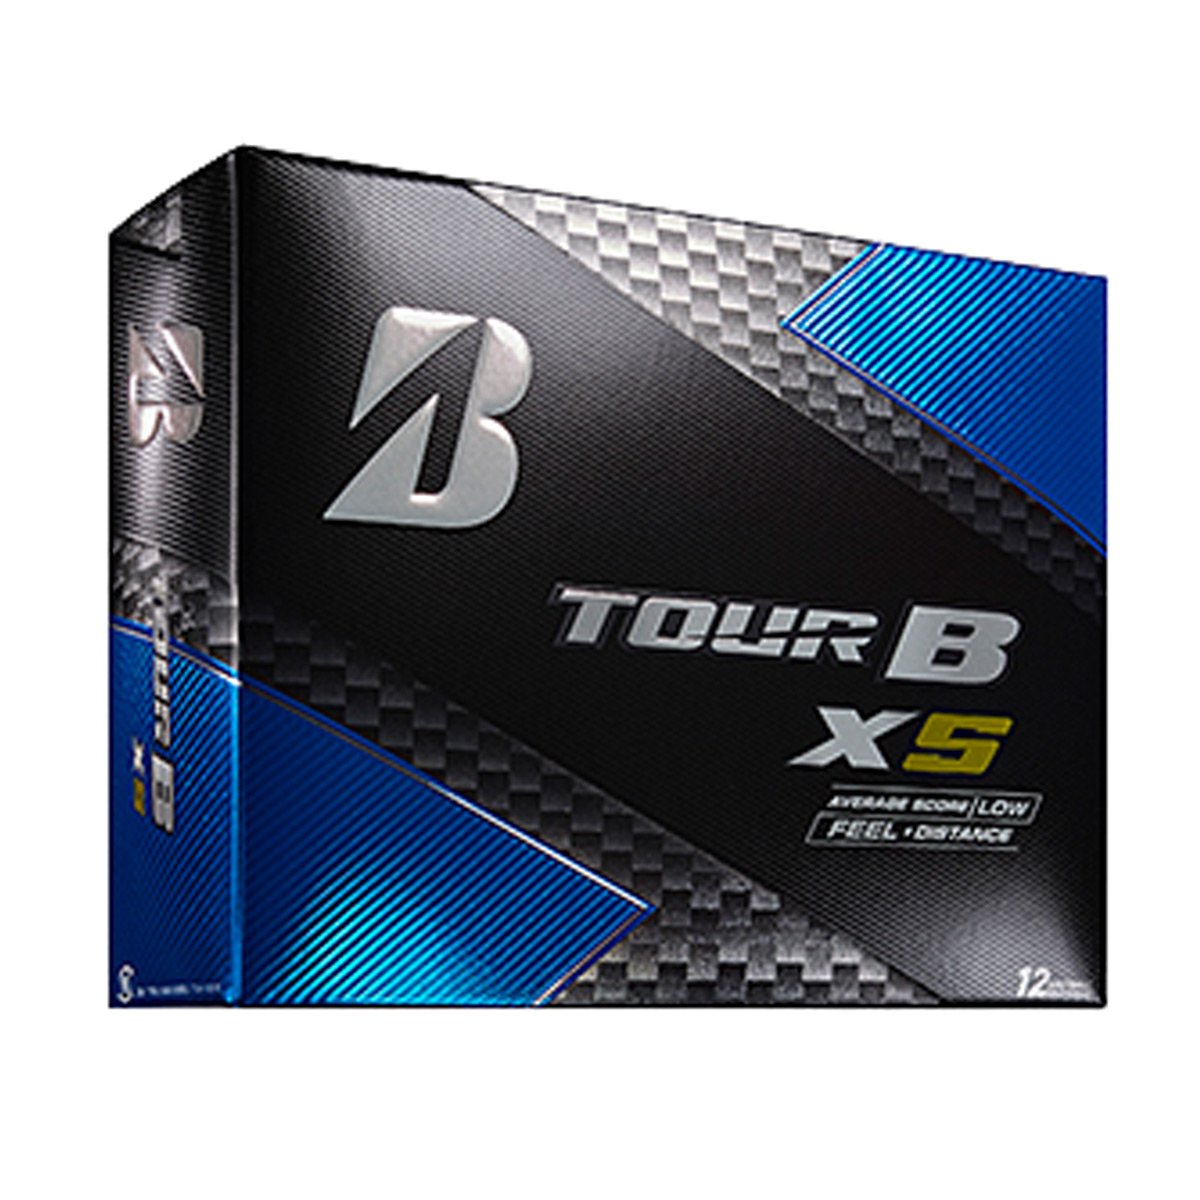 Bridgestone Tour B XS Golf Balls - Dozen 